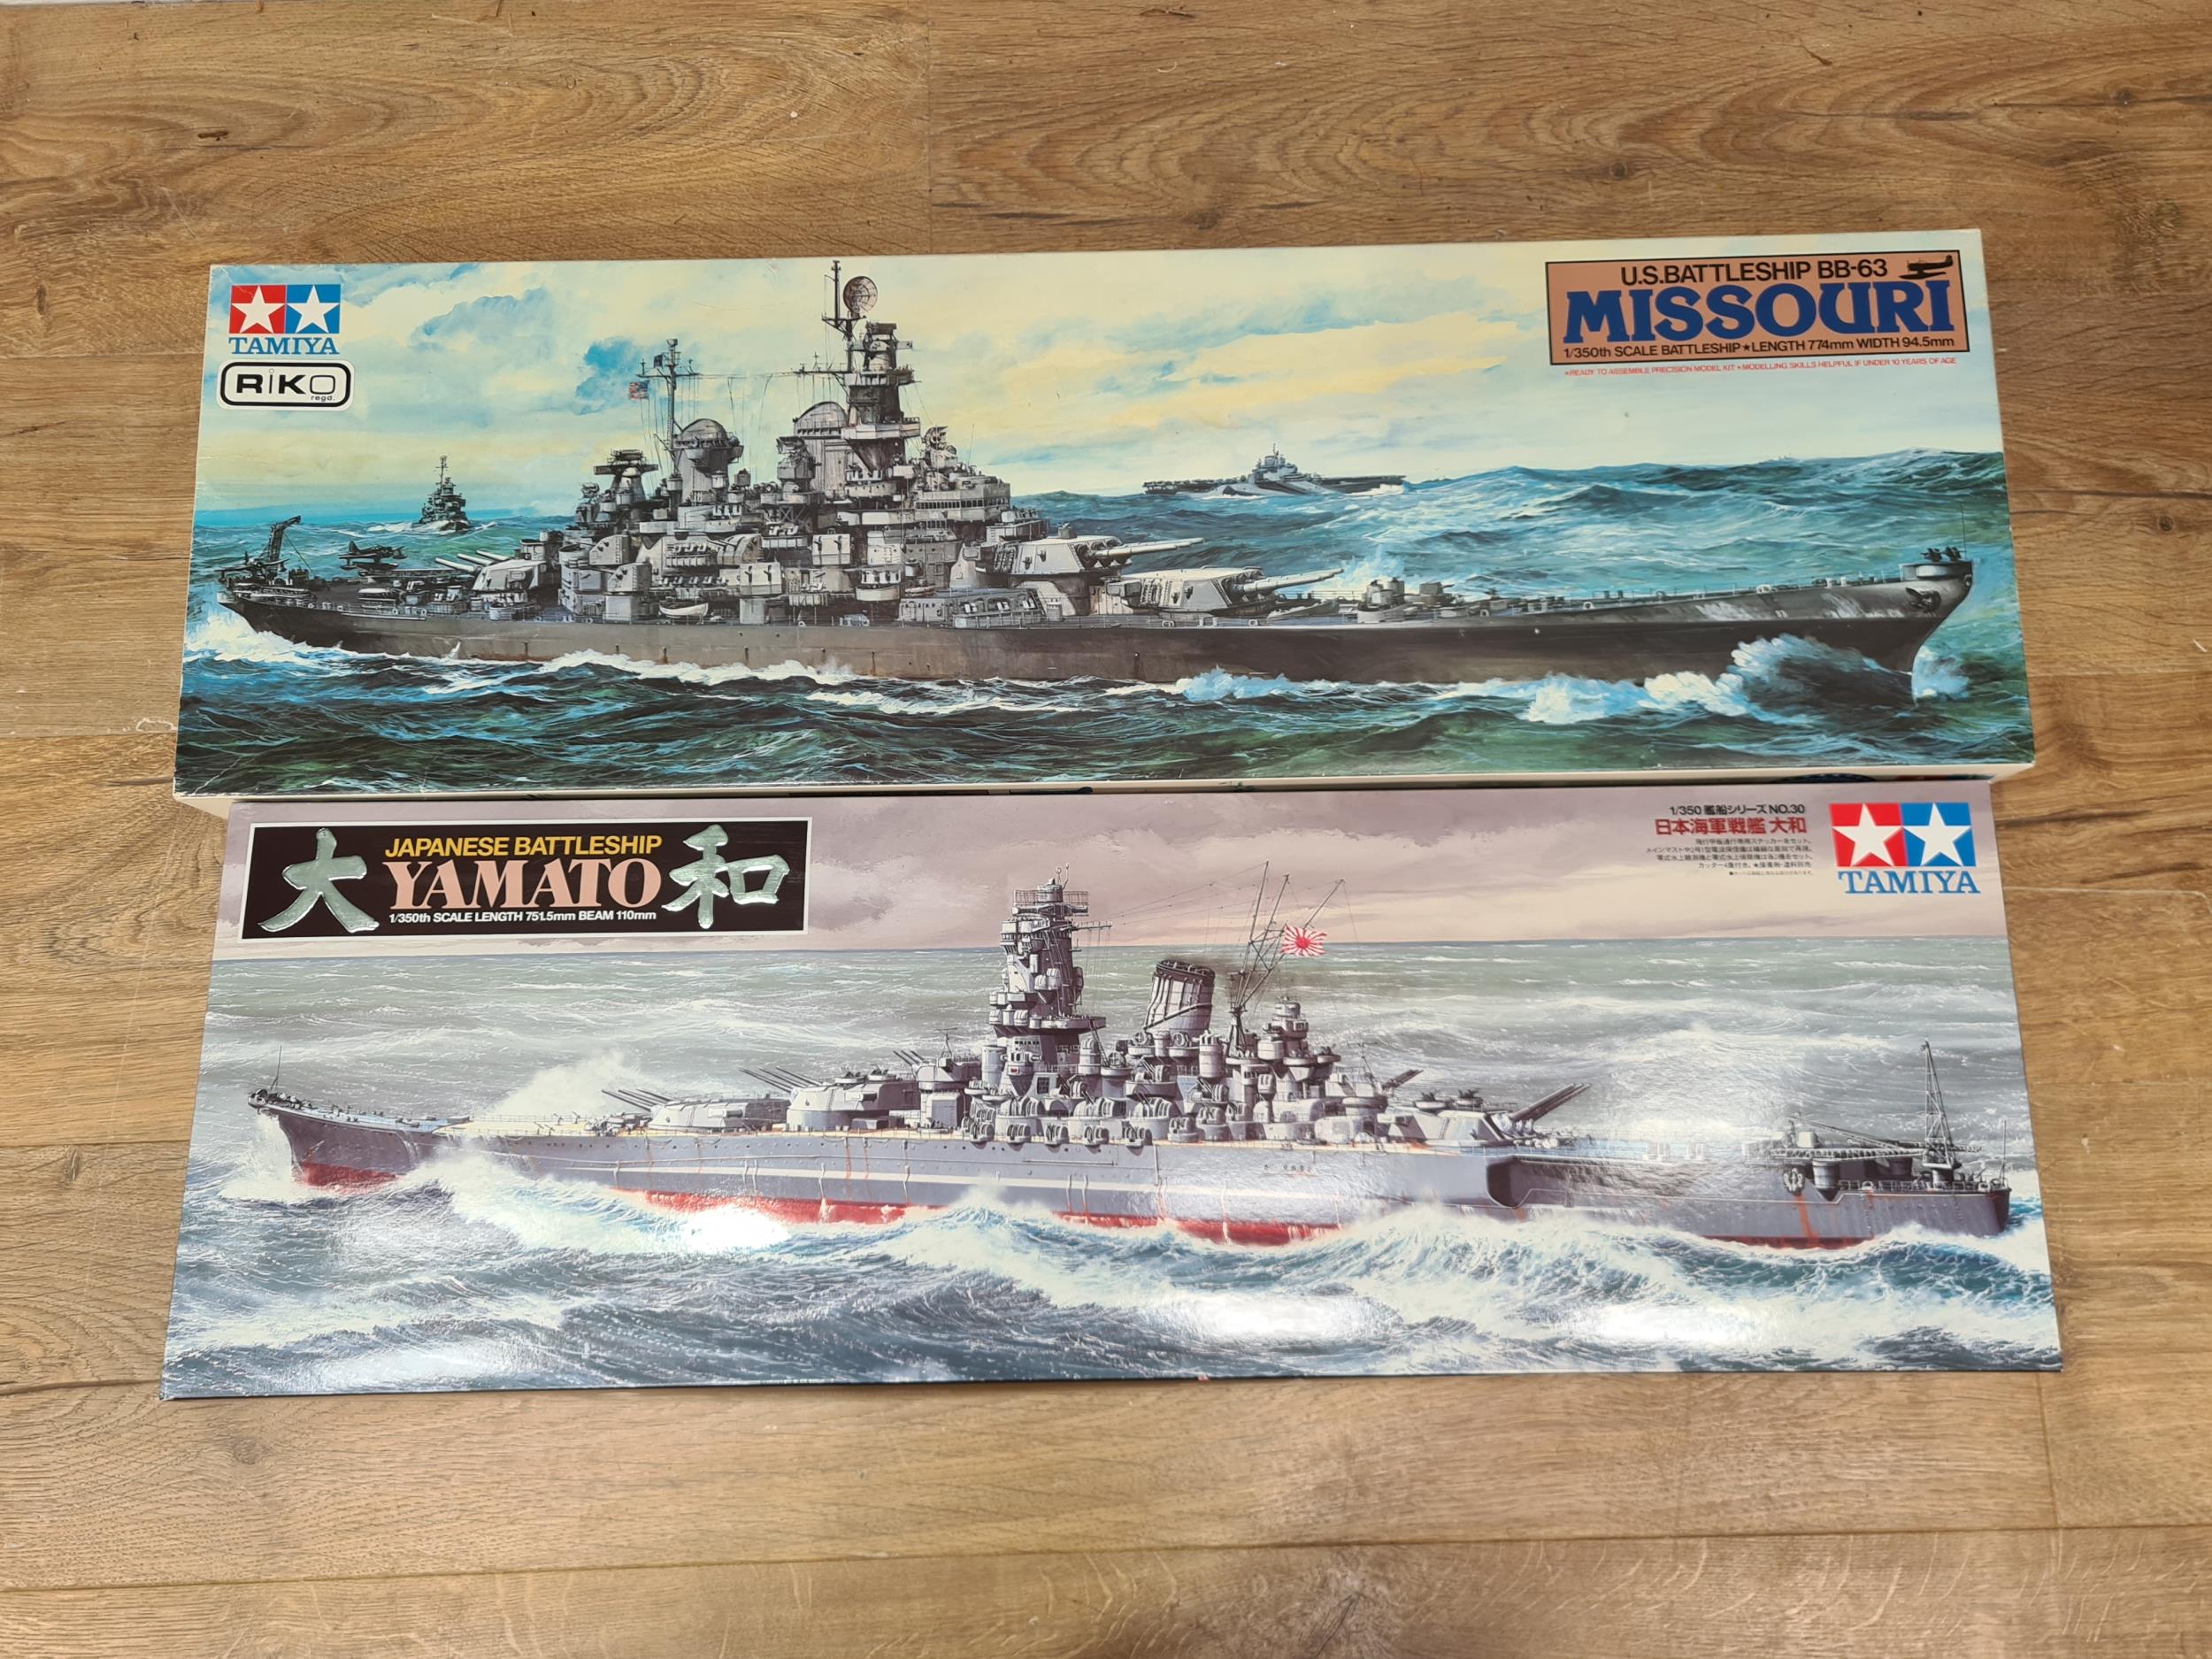 Two Tamiya 1:350 scale Plastic Kits of U.S. Battleship 'BB-63 Missouri' and Japanese Battleship '